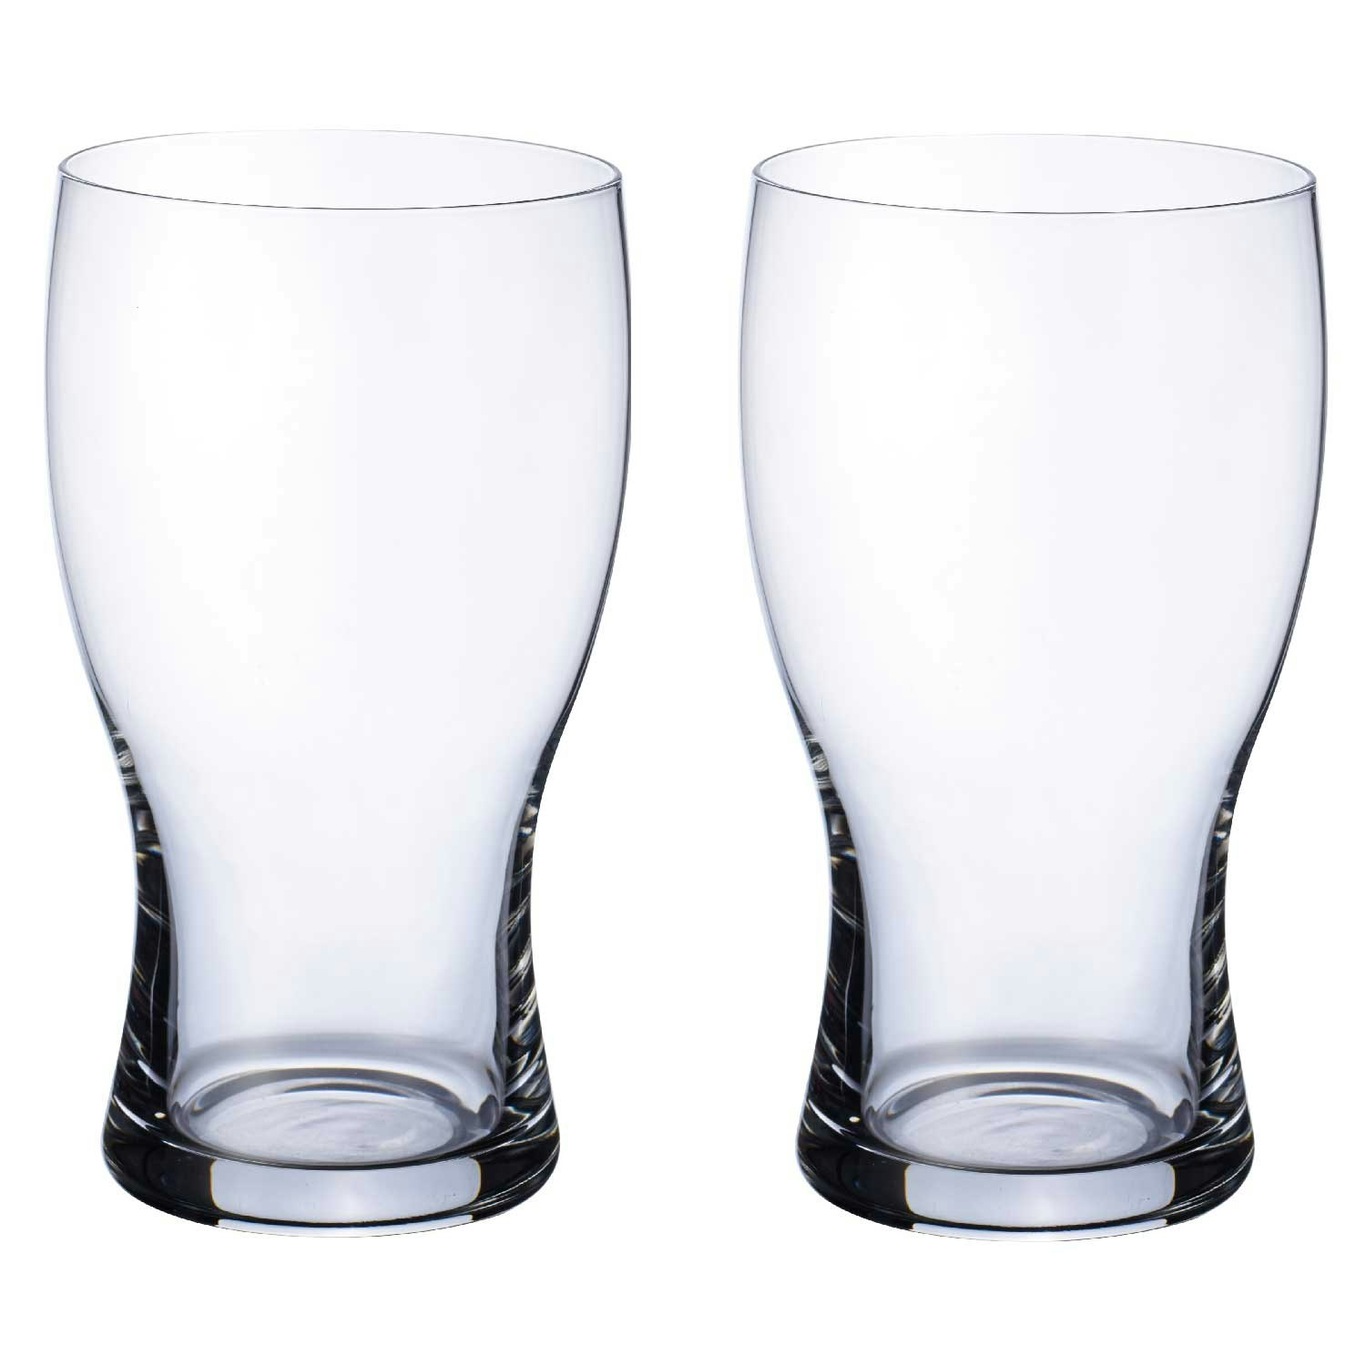 https://royaldesign.com/image/2/villeroy-boch-purismo-beer-glass-2-pcs-62-cl-0?w=800&quality=80